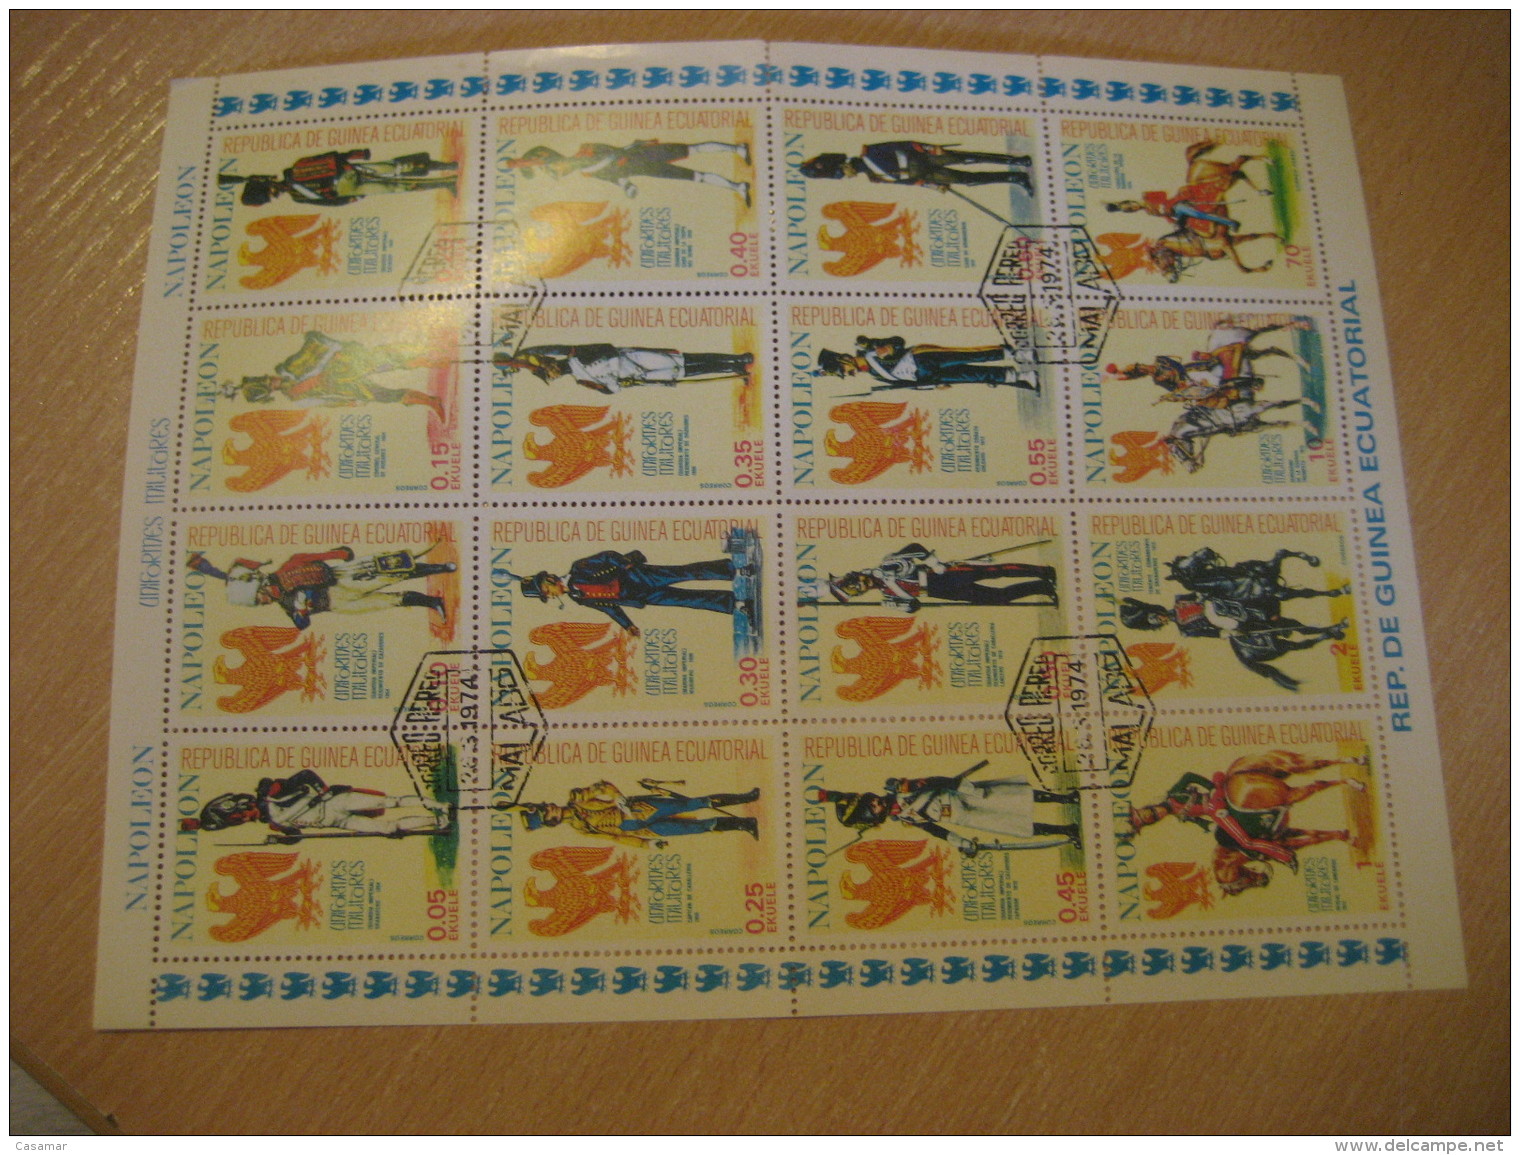 MALABO Guinea Ecuatorial 1974 Cancel Air Mail Bloc 16 Stamp Sheet NAPOLEON History Military Uniform - Napoleon